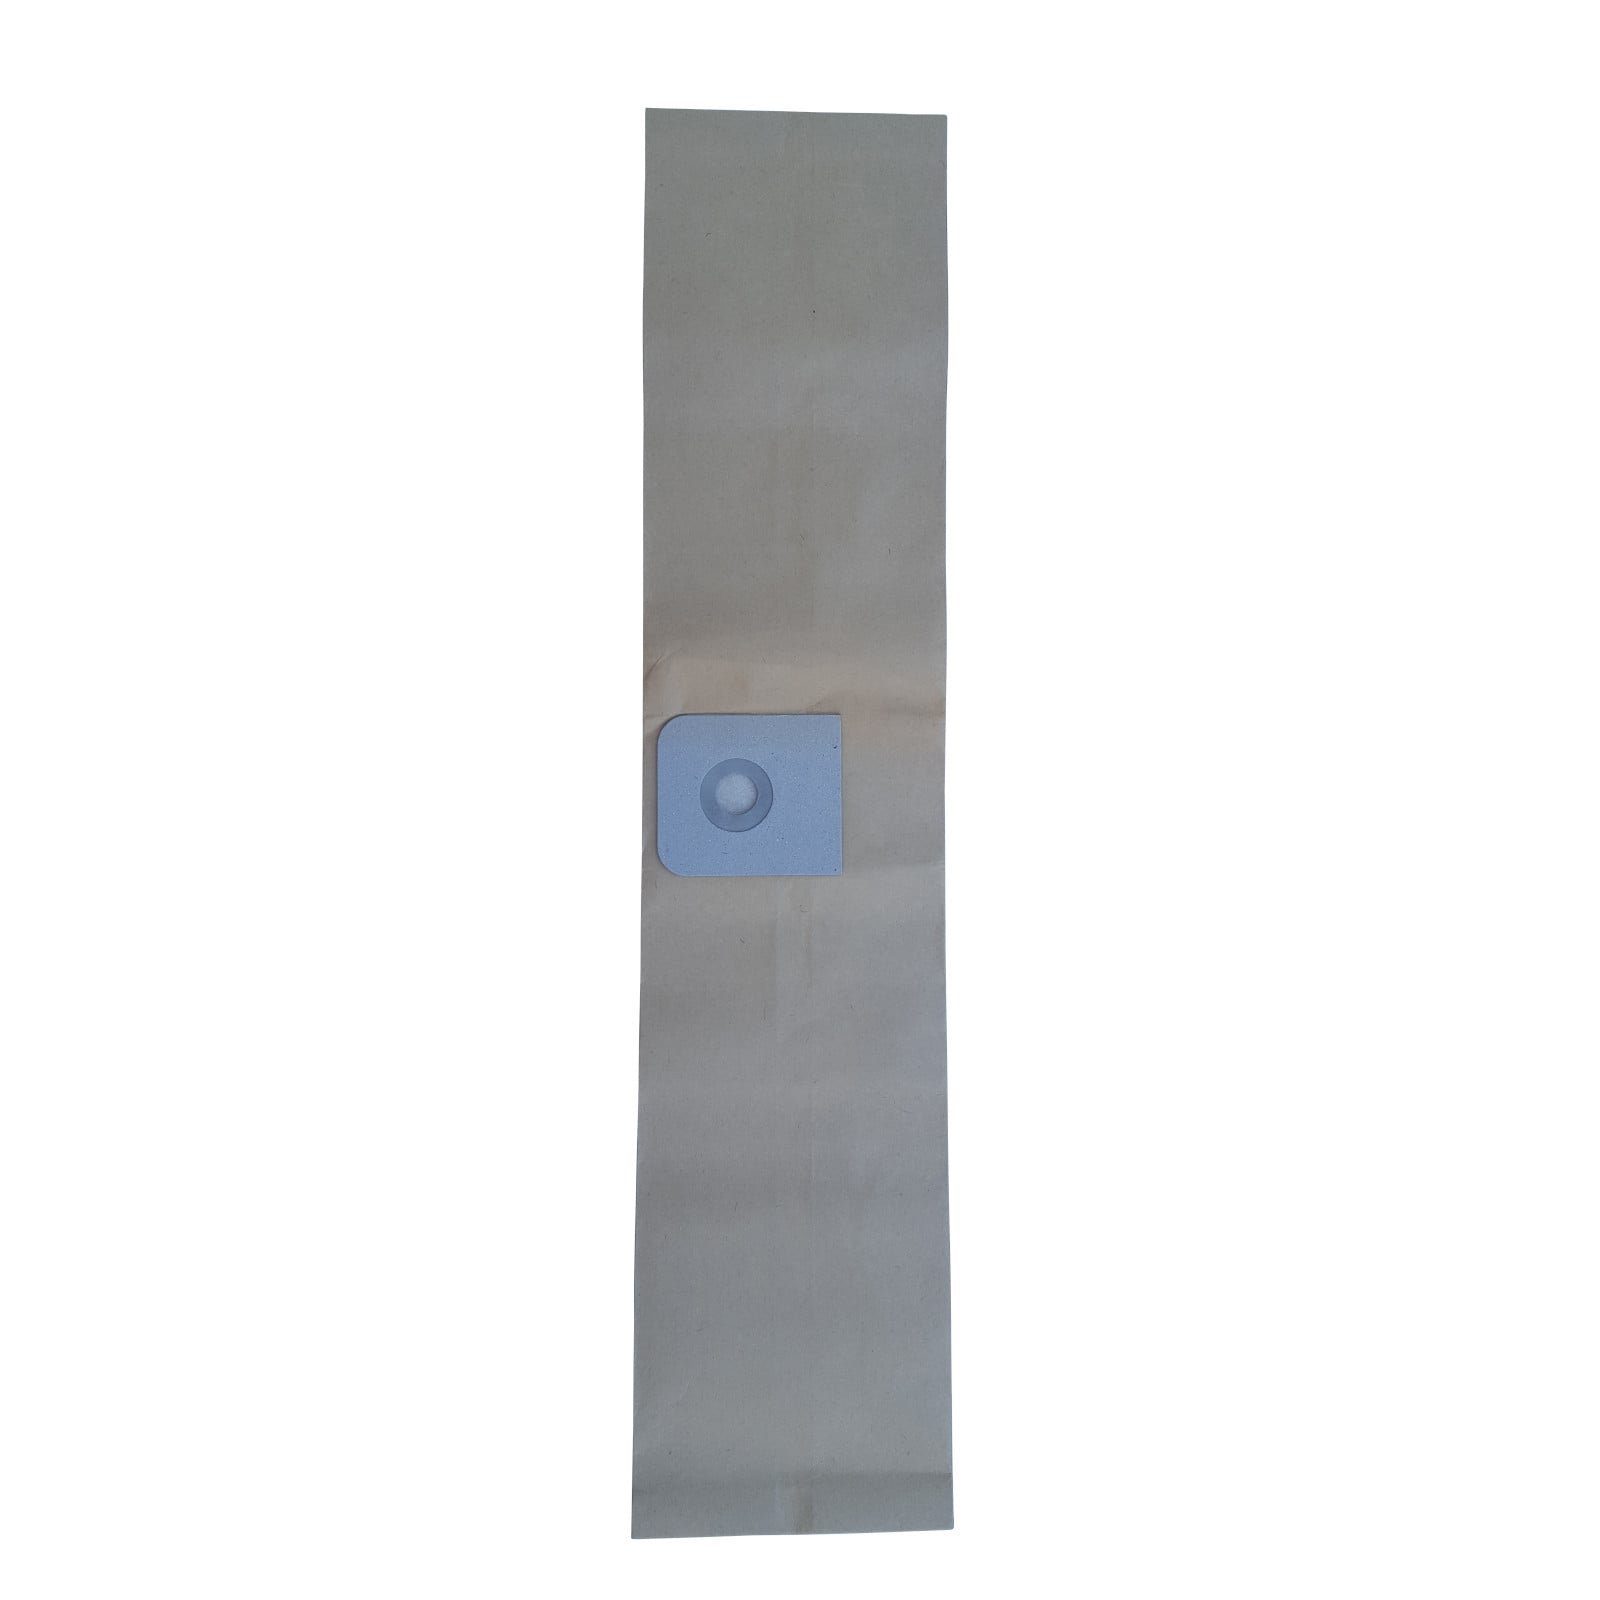 Reinica Staubsaugerbeutel passend für Clean a la Card  1210 N Whisper, 10er-Pack Staubbeutel Saugerbeutel Beutel Filtertüten